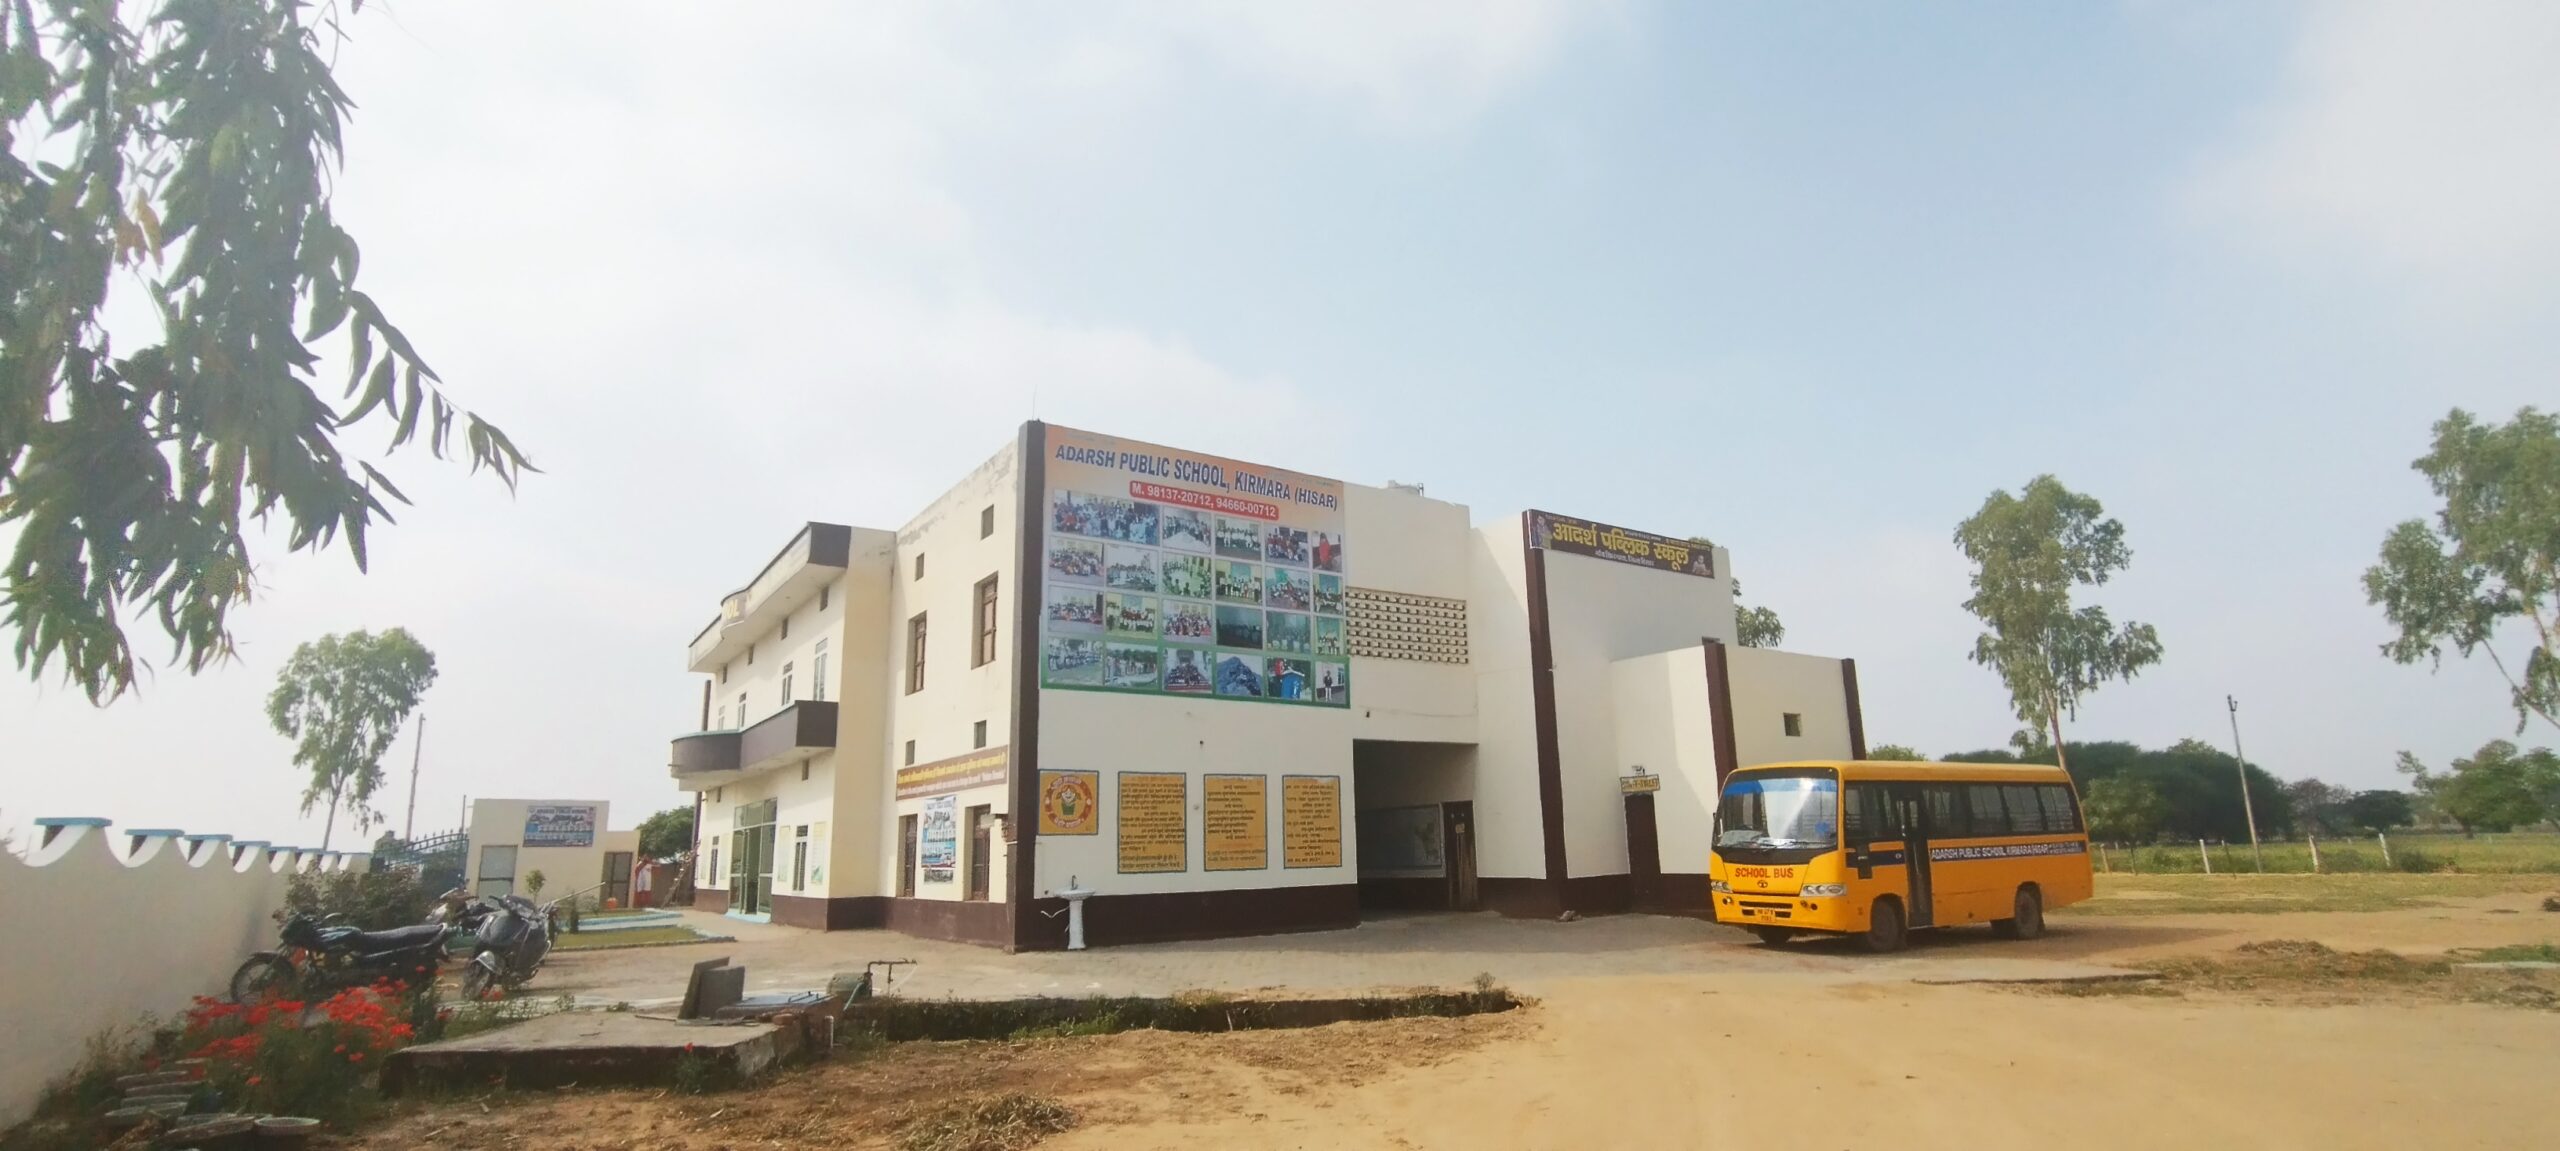 The Adarsh Public School, kirmara Best School in Kirmara Best HBSE School Near  me Top ranked HBSE School in Hisar